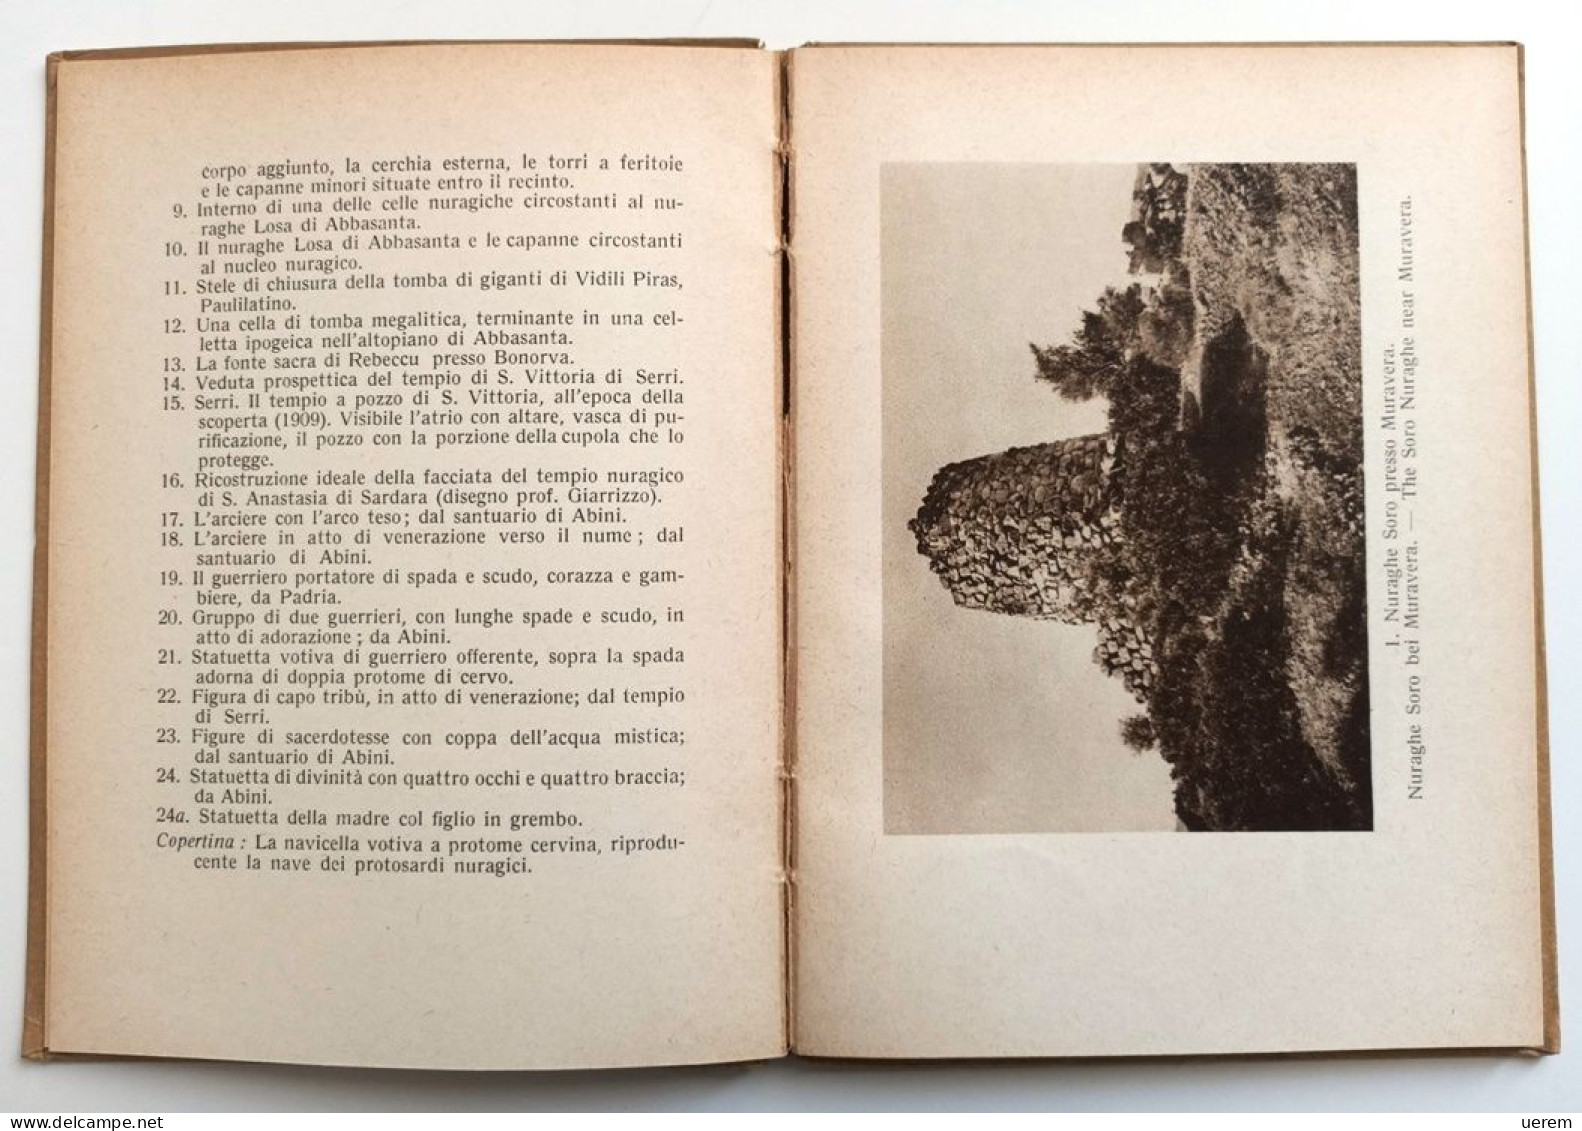 1930 Sardegna Archeologia Taramelli TARAMELLI ANTONIO I Nuraghi Ed I Loro Primi Abitatori - Libros Antiguos Y De Colección